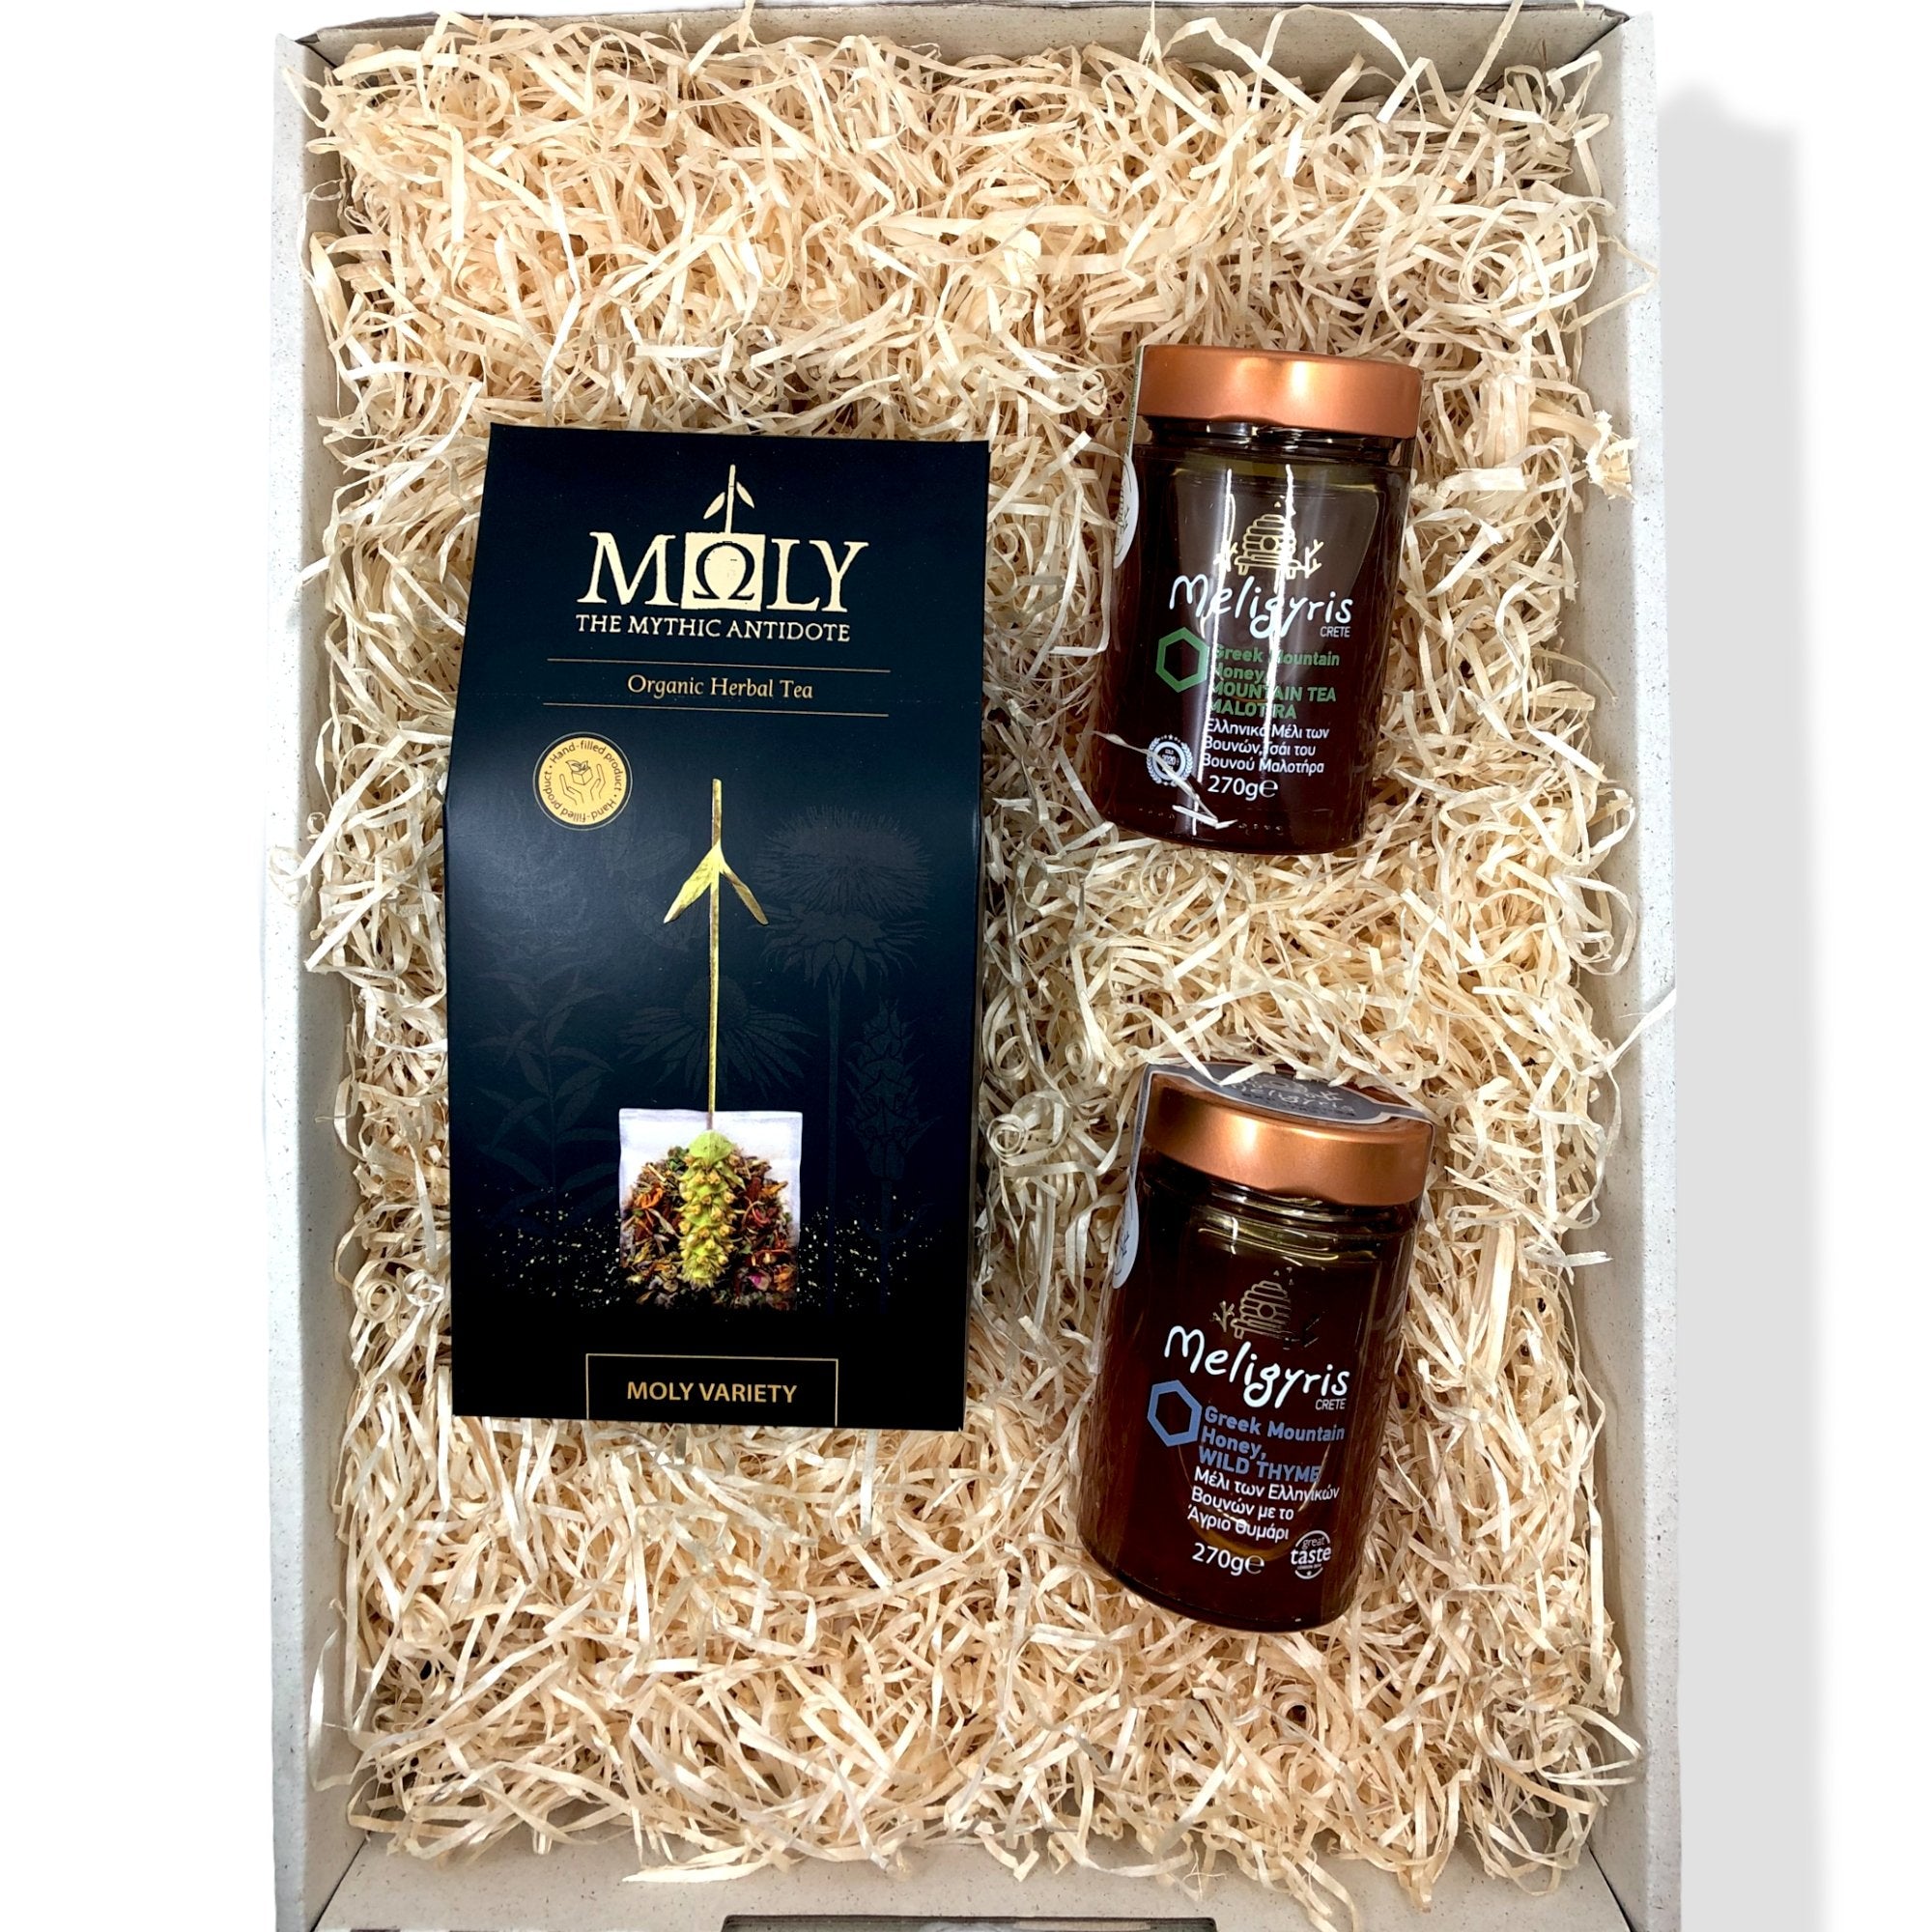 OlivenZauber Geschenkset “Bergtee & Honig” - OlivenZauber - Olivenöl neu erleben